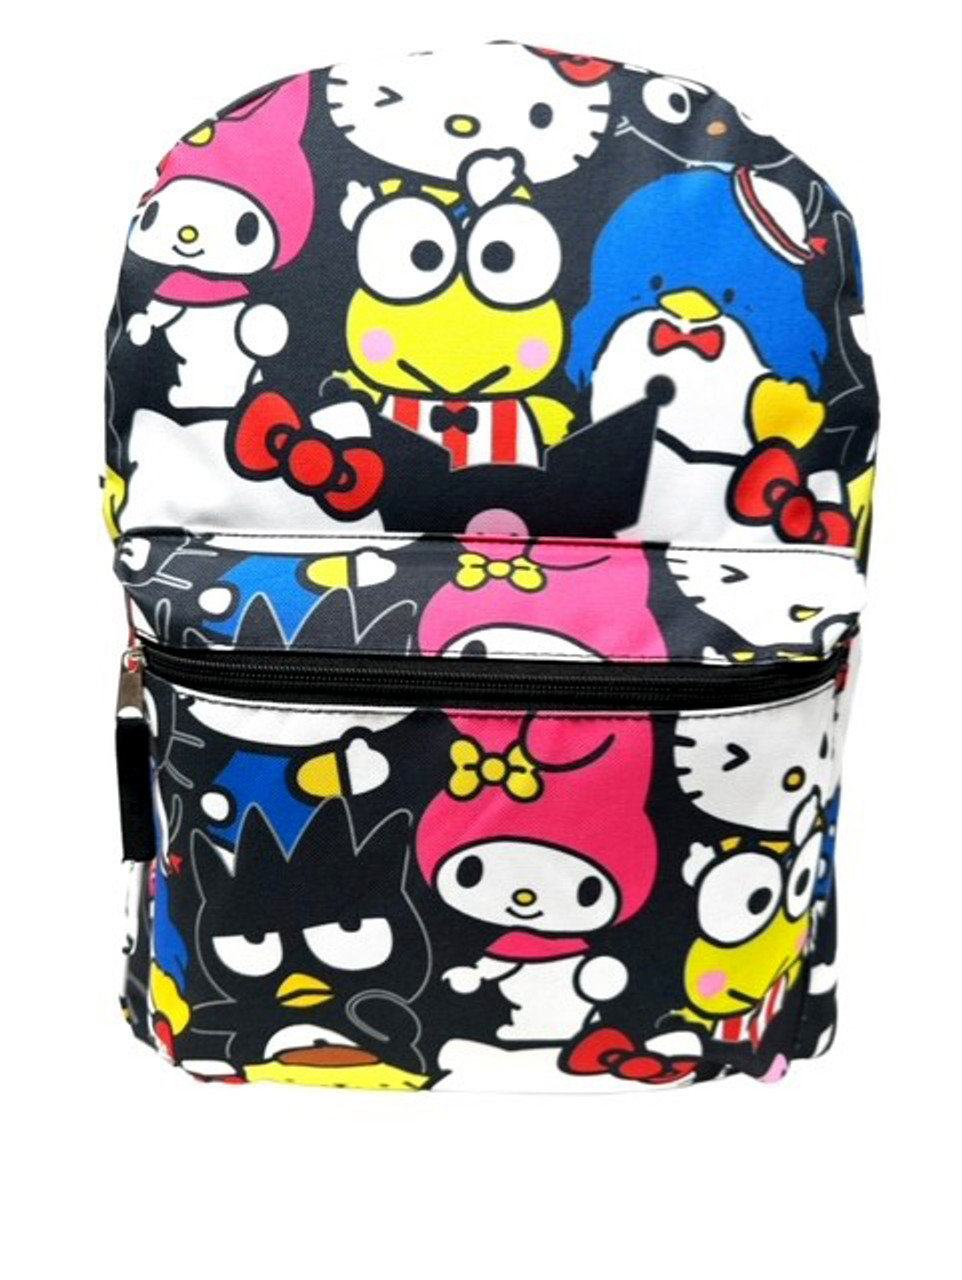 Sanrio Hello Kitty Multi Print Large Messenger Bag - Backpack Girls School